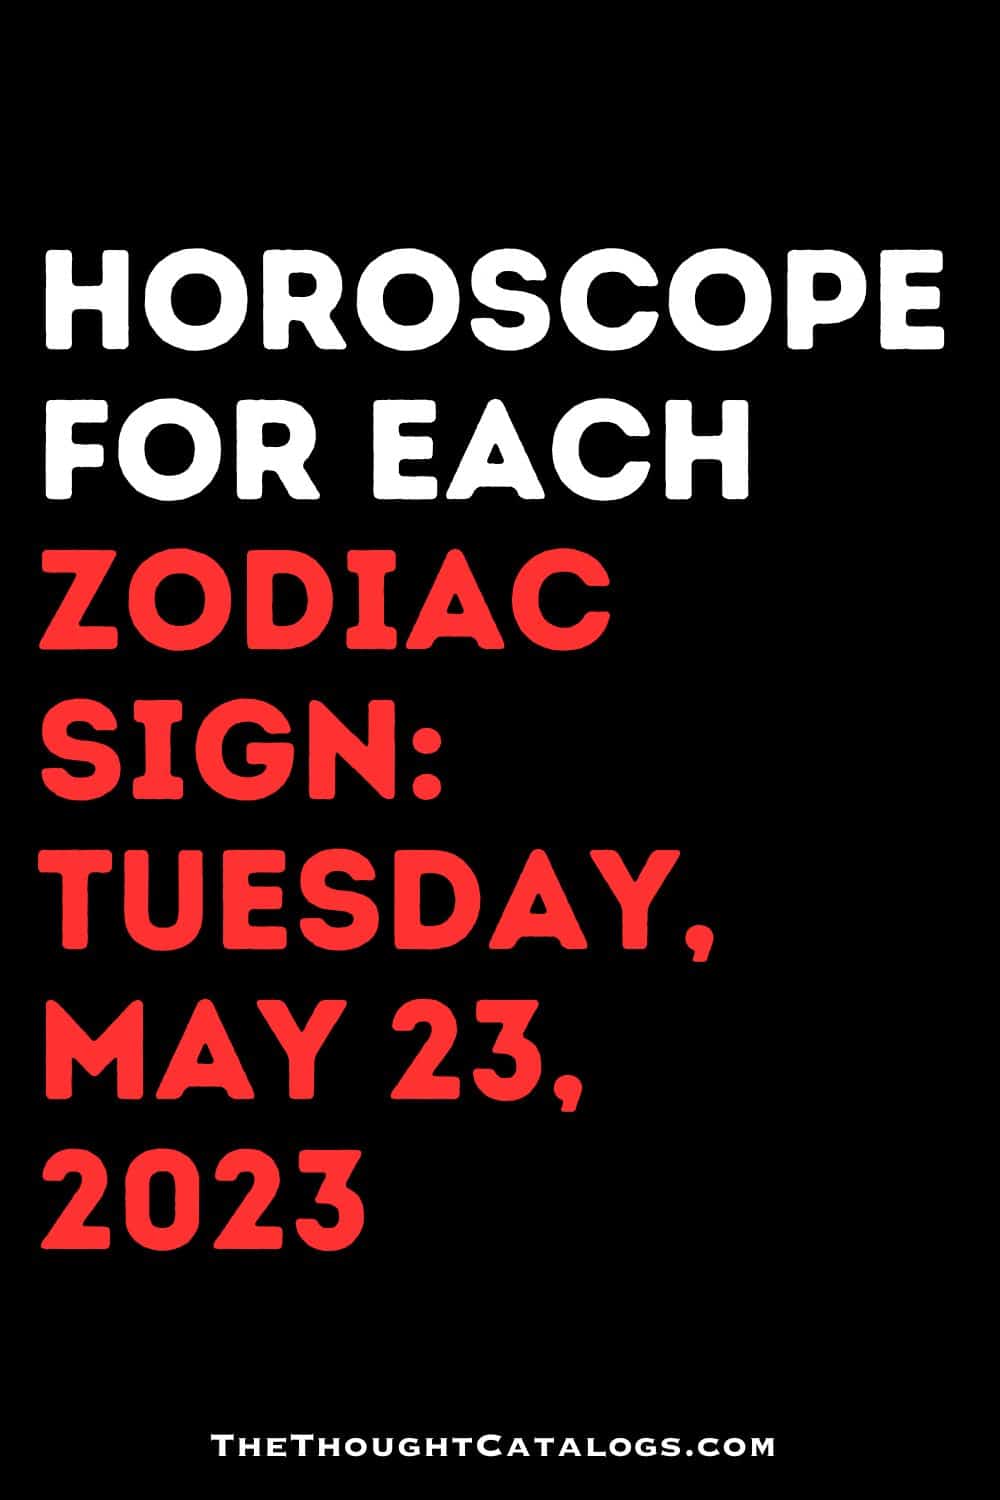 Horoscope For Each Zodiac Sign: Tuesday, May 23, 2023